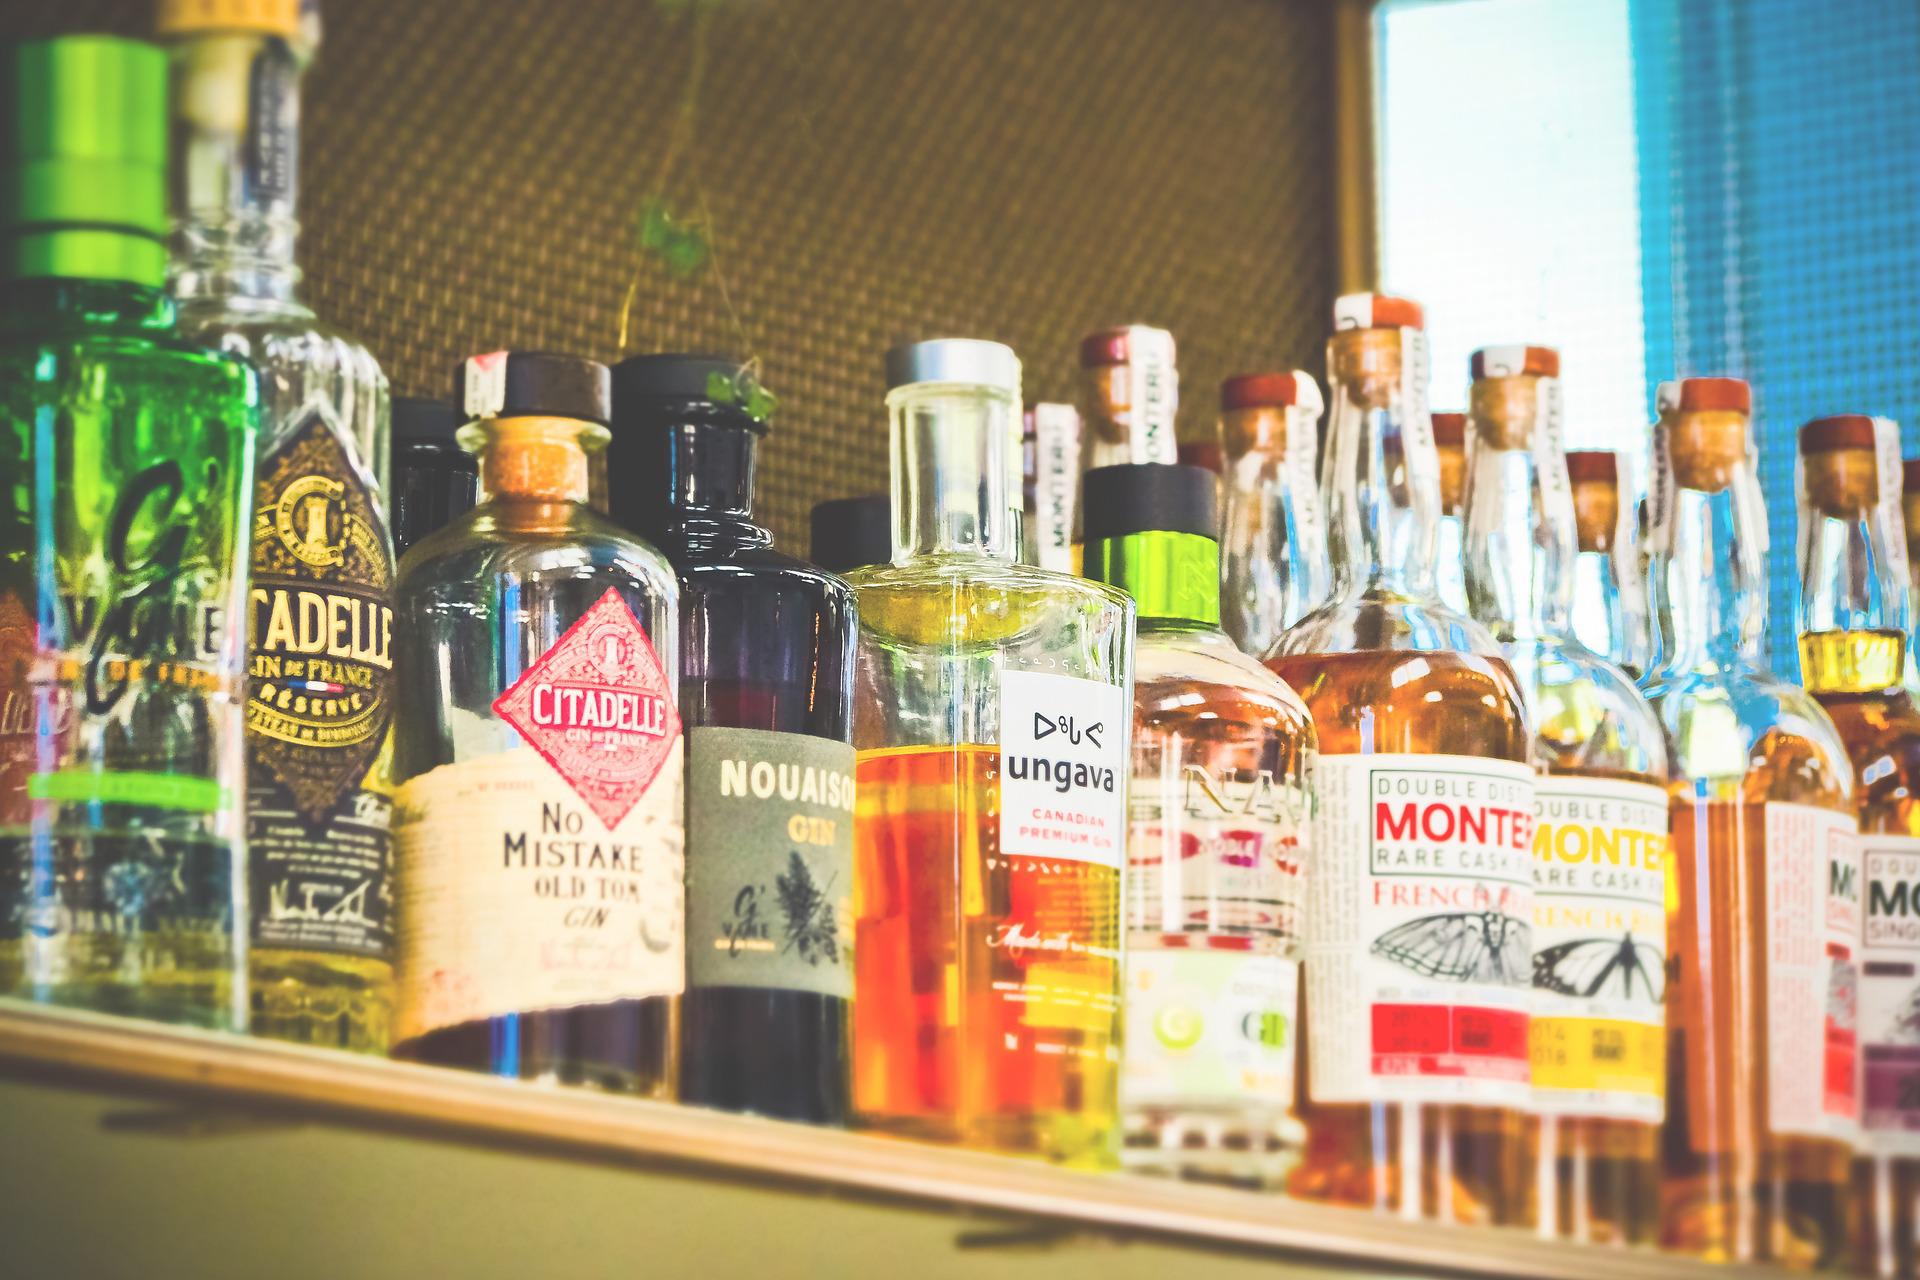 https://pixabay.com/photos/bottles-alcohol-drinks-bar-liquor-3623317/